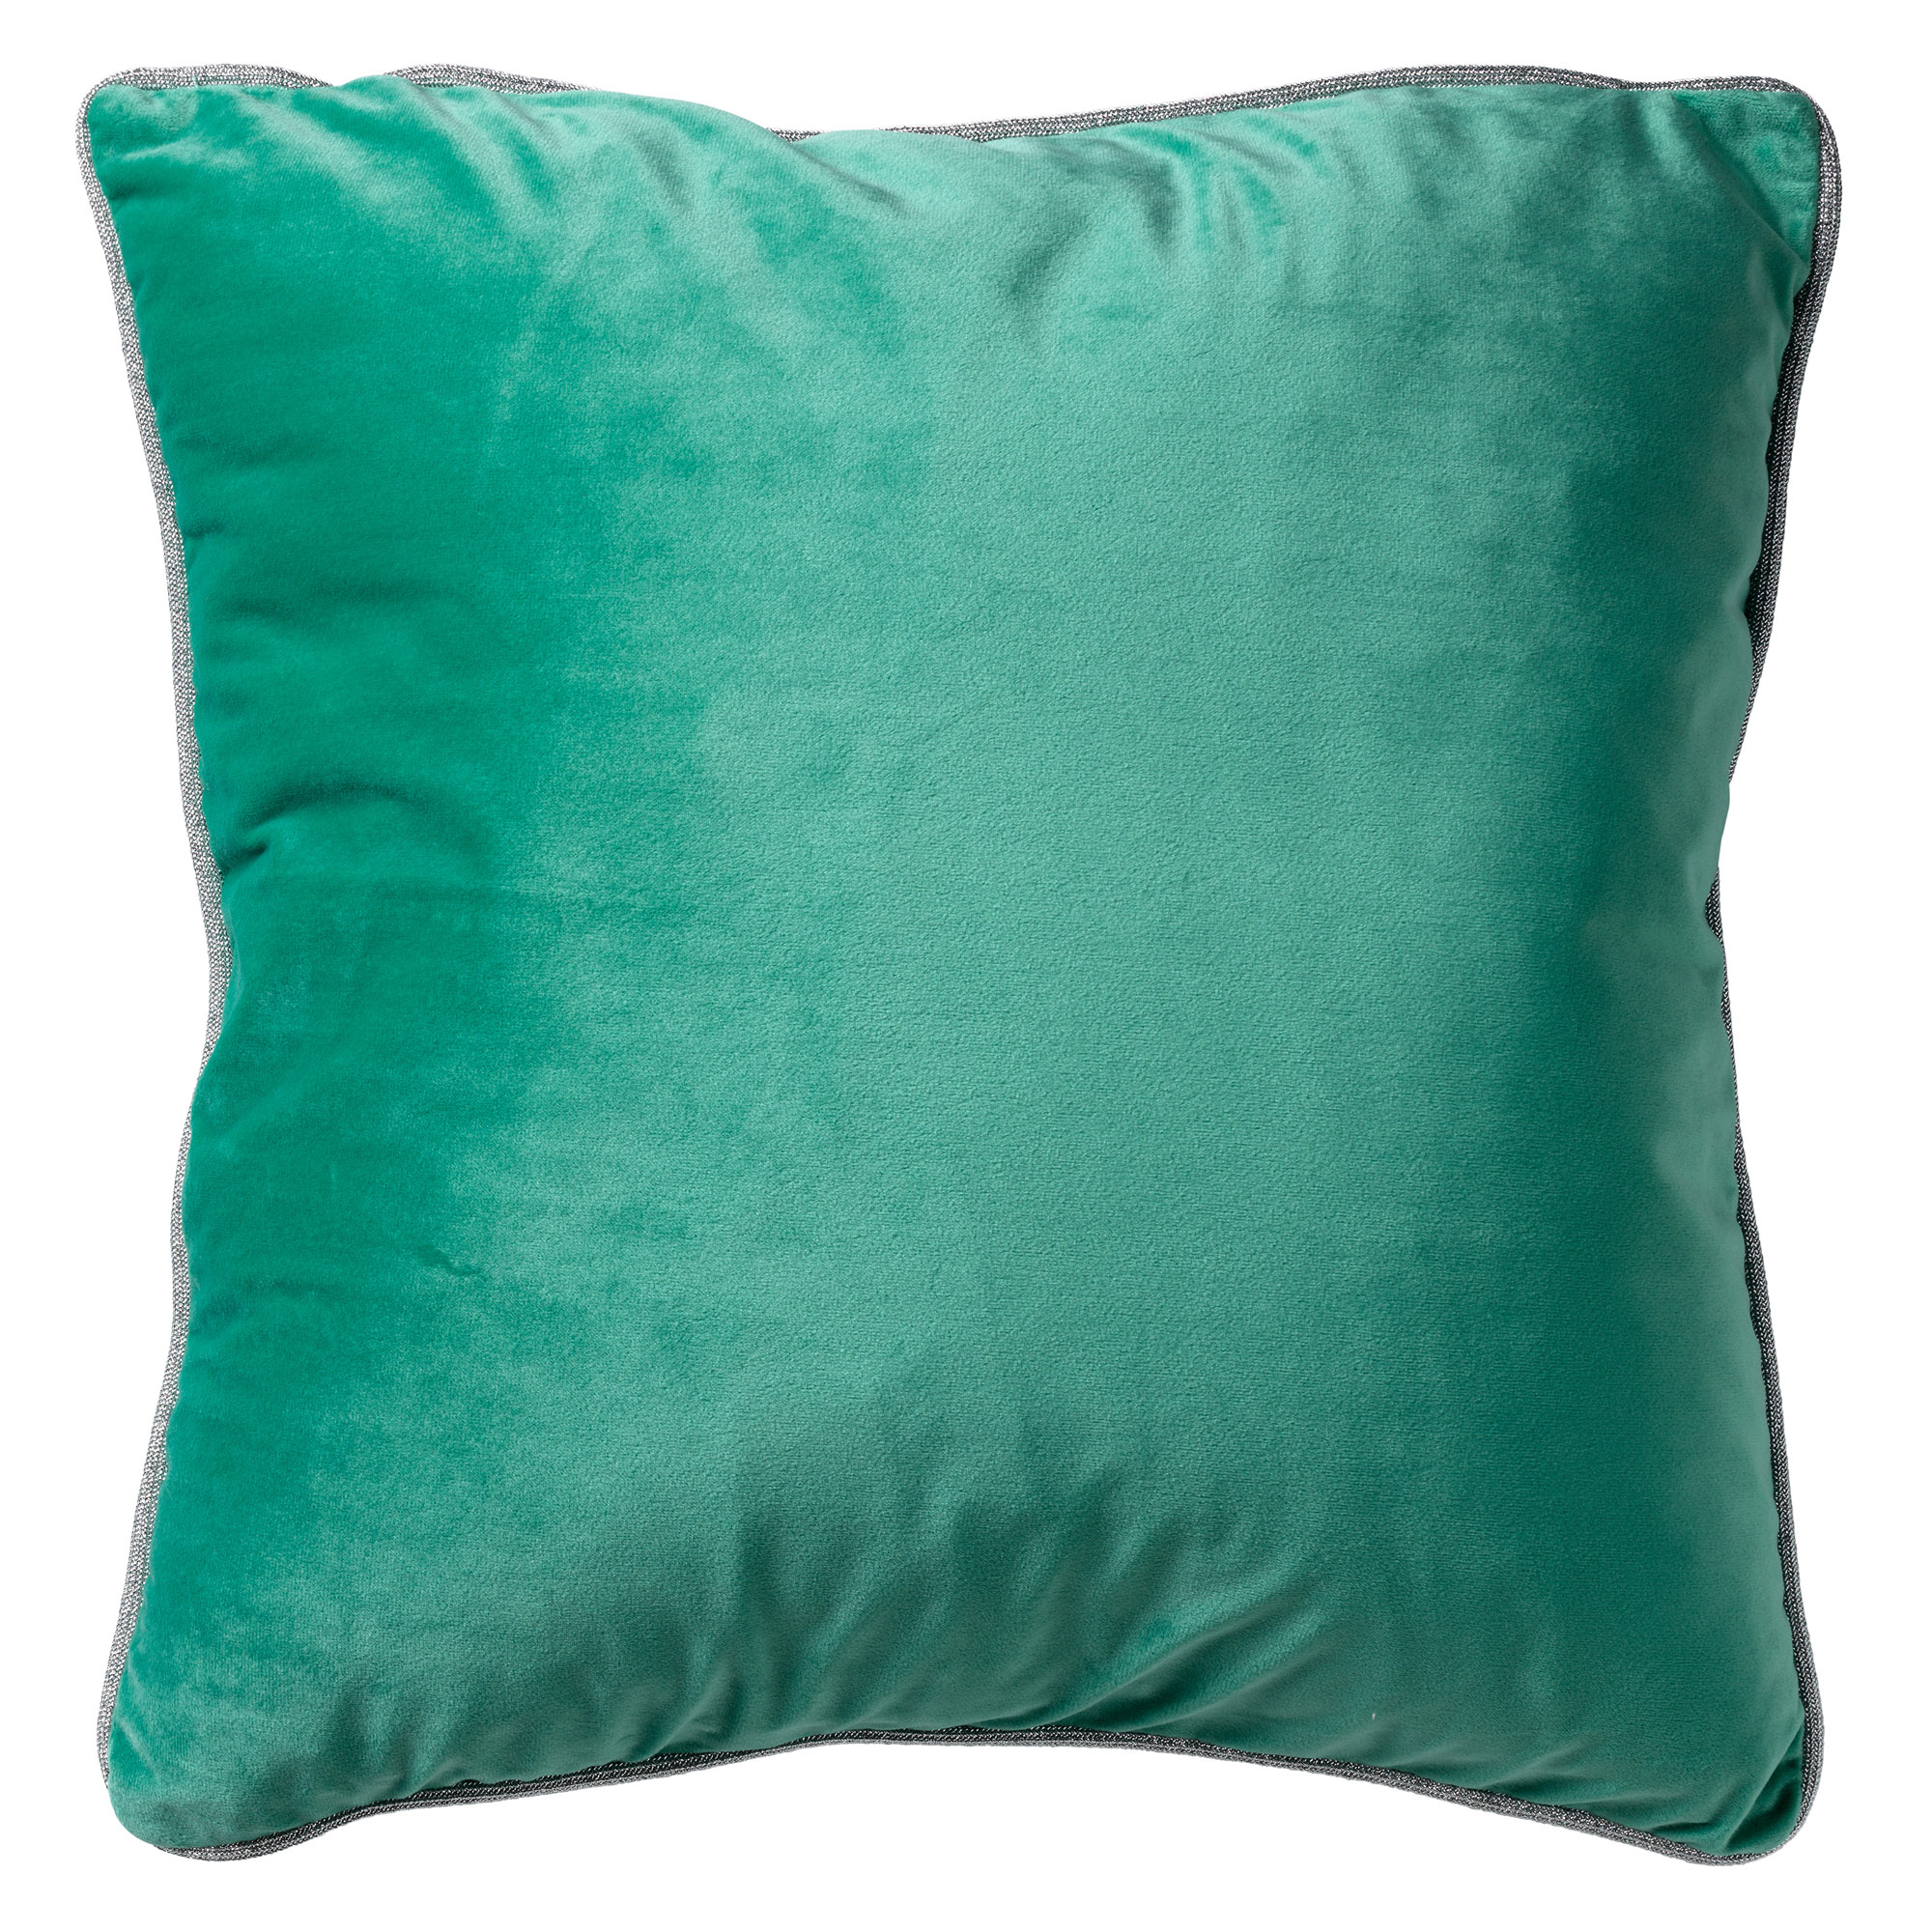 FINN - Kussenhoes 45x45 cm - velvet - effen kleur - met glitterbies - Spearmint - groen